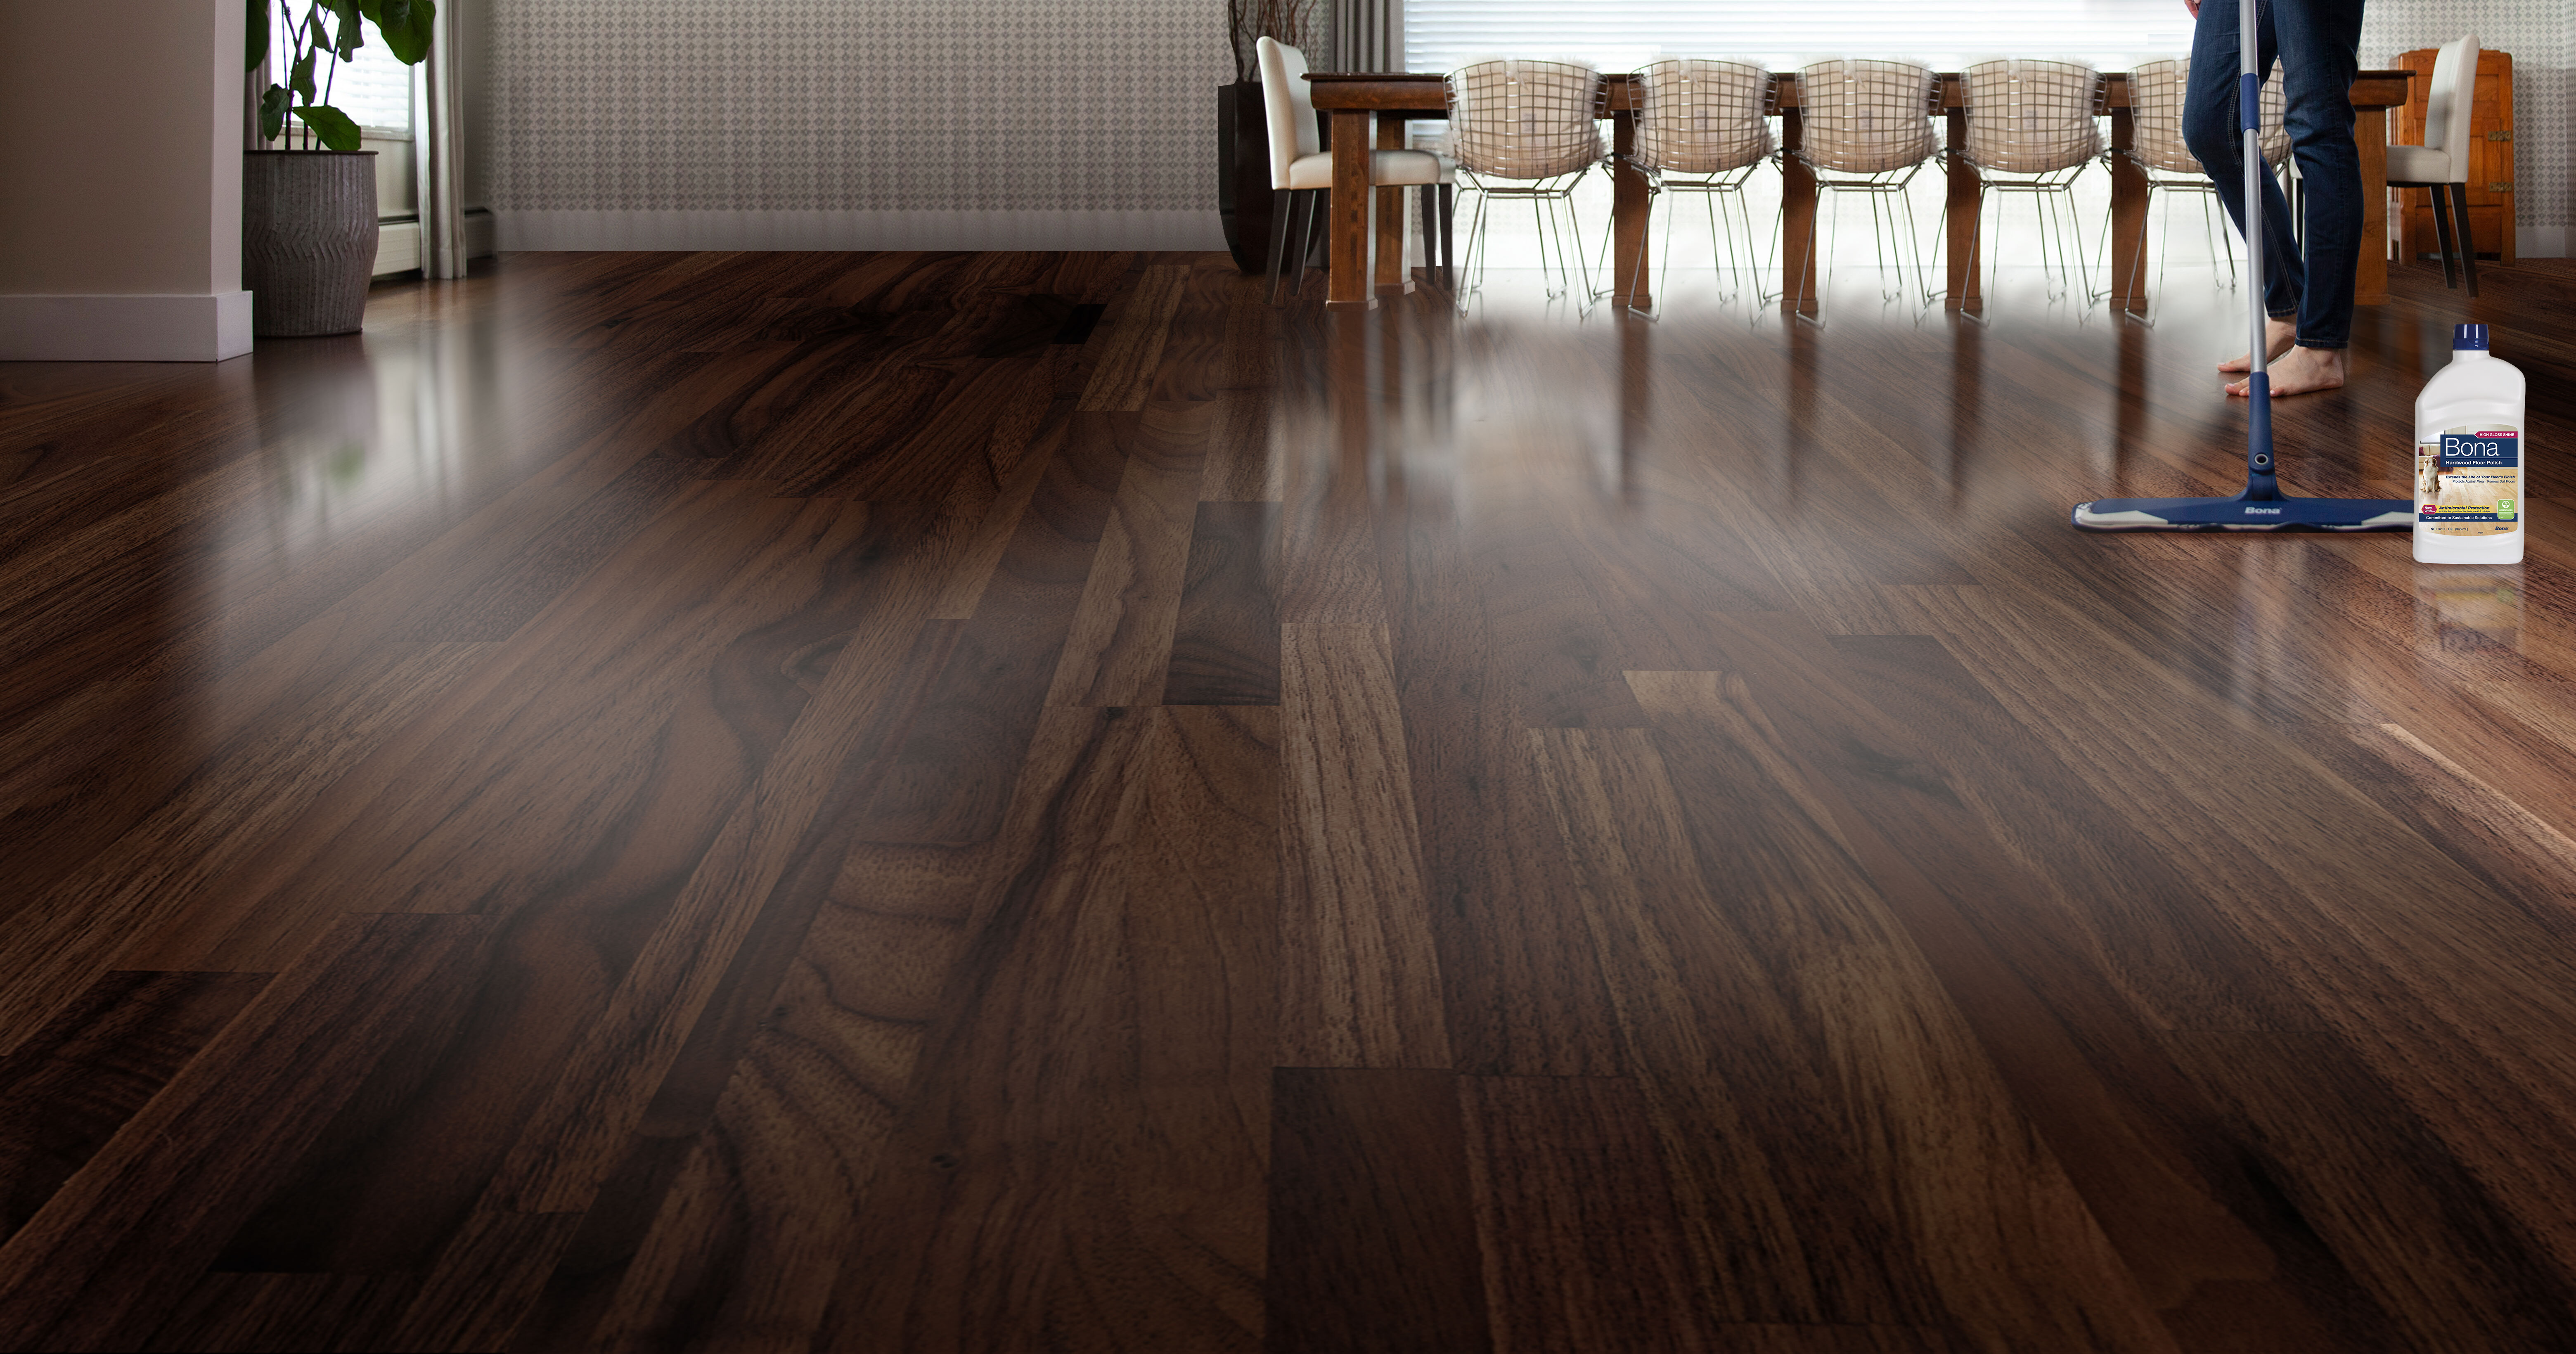 How To Polish Hardwood Floors Do S And, How To Put Gloss On Hardwood Floors